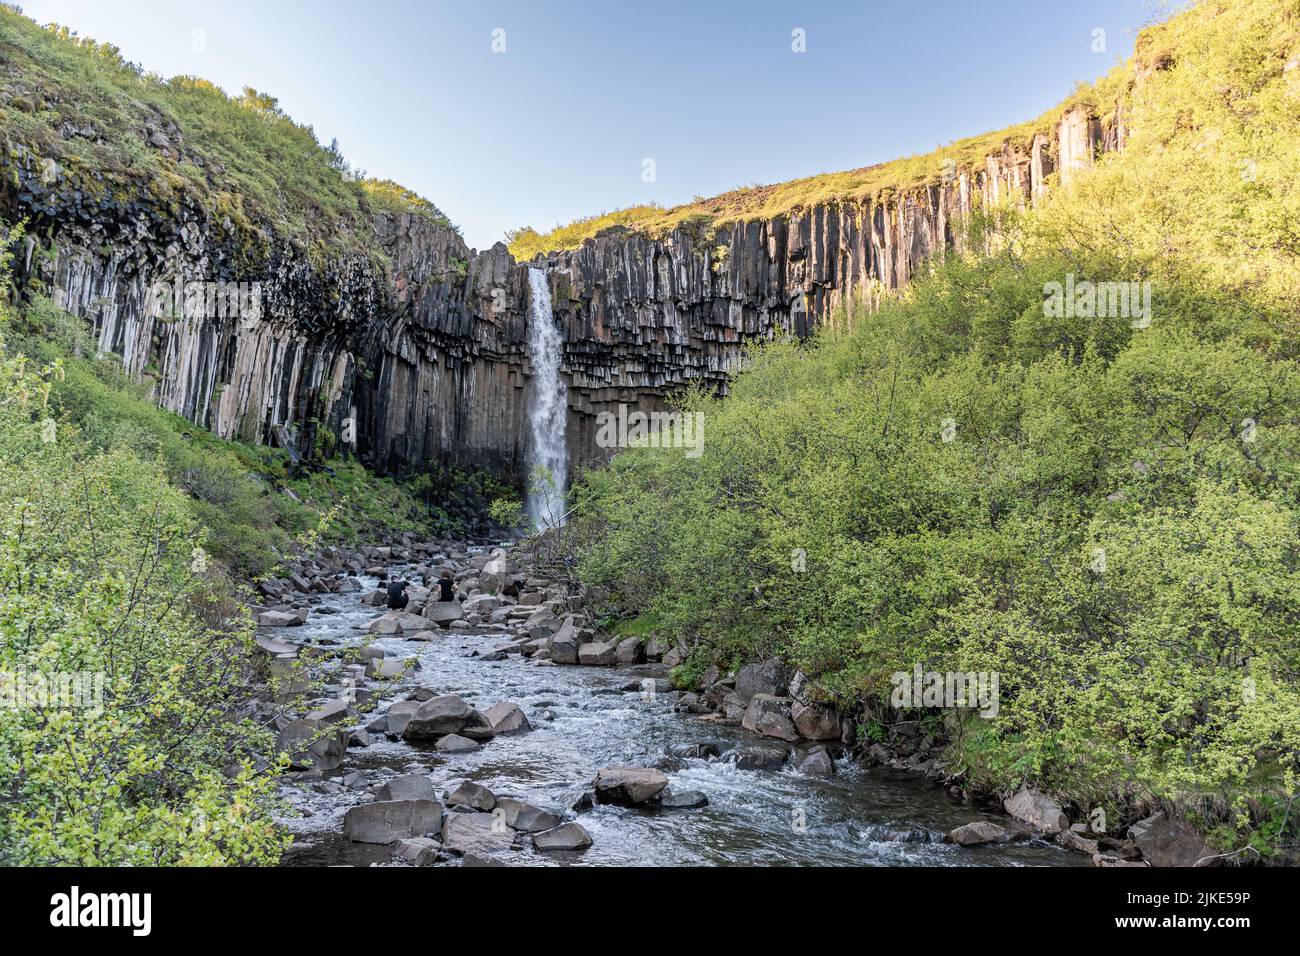 Svartifoss waterfall in Skaftafell National Park in Iceland, surrounded by dark basalt columns Stock Photo